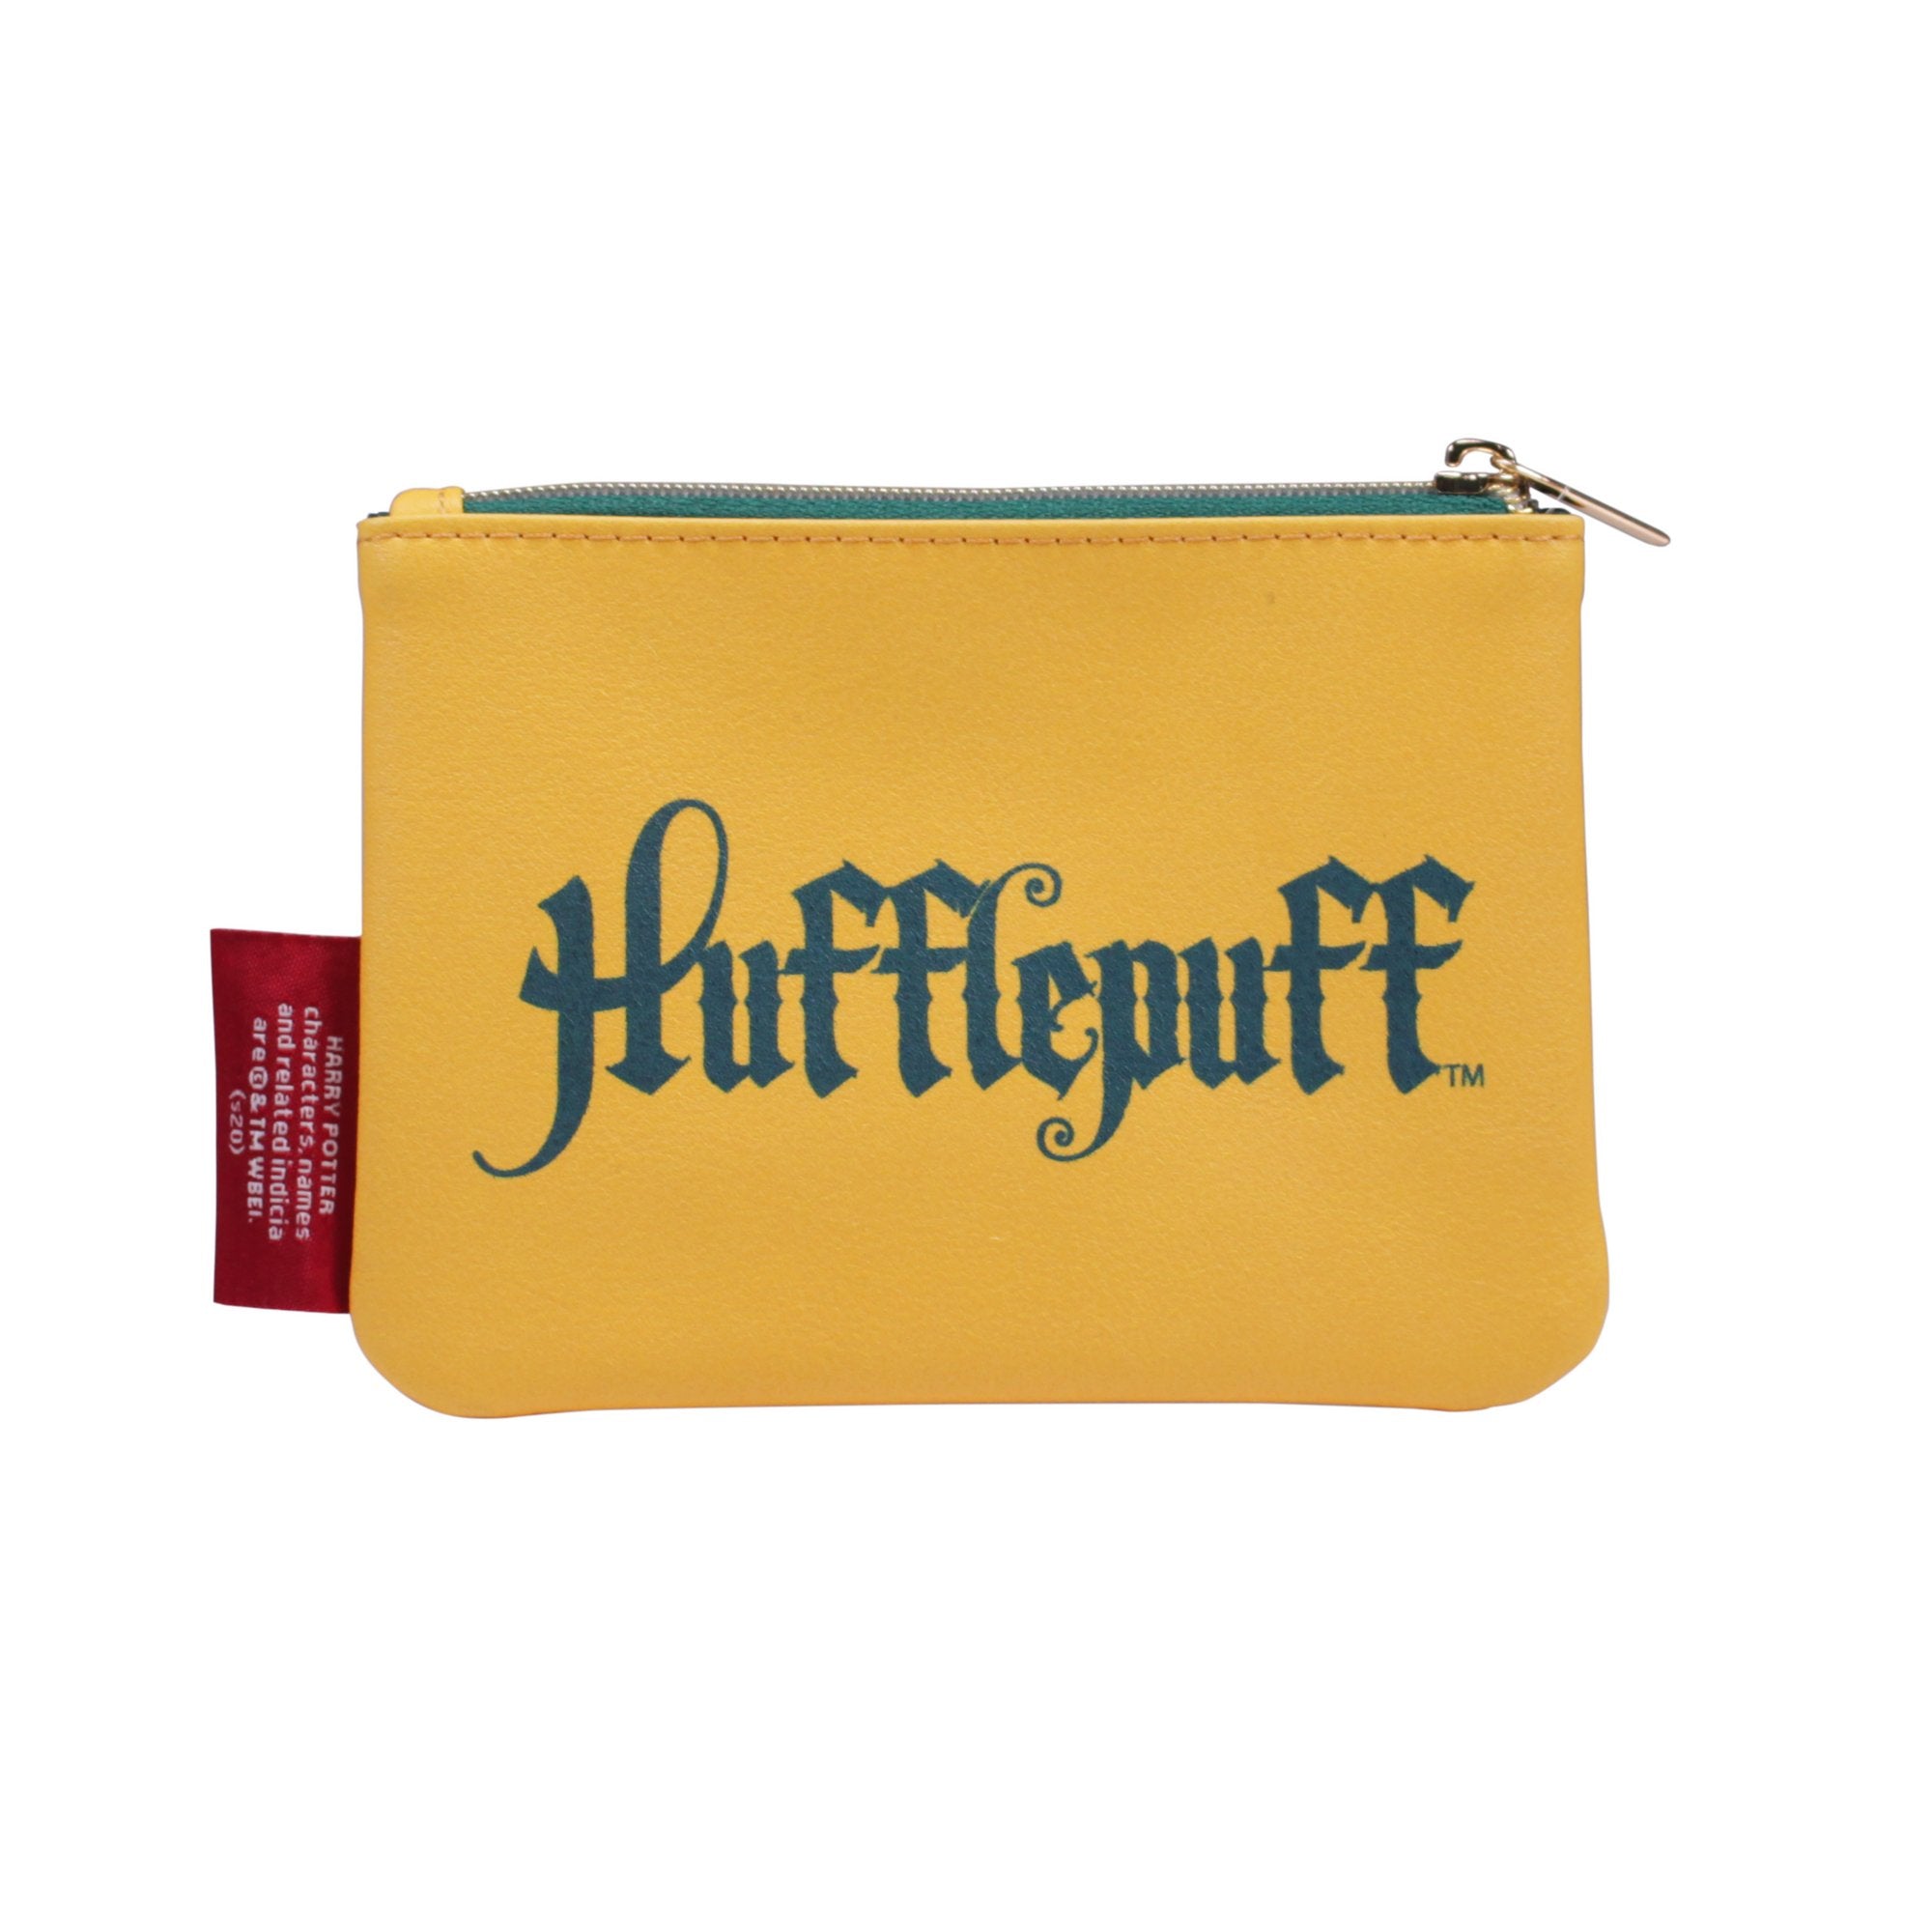 Harry Potter Purse - Hufflepuff